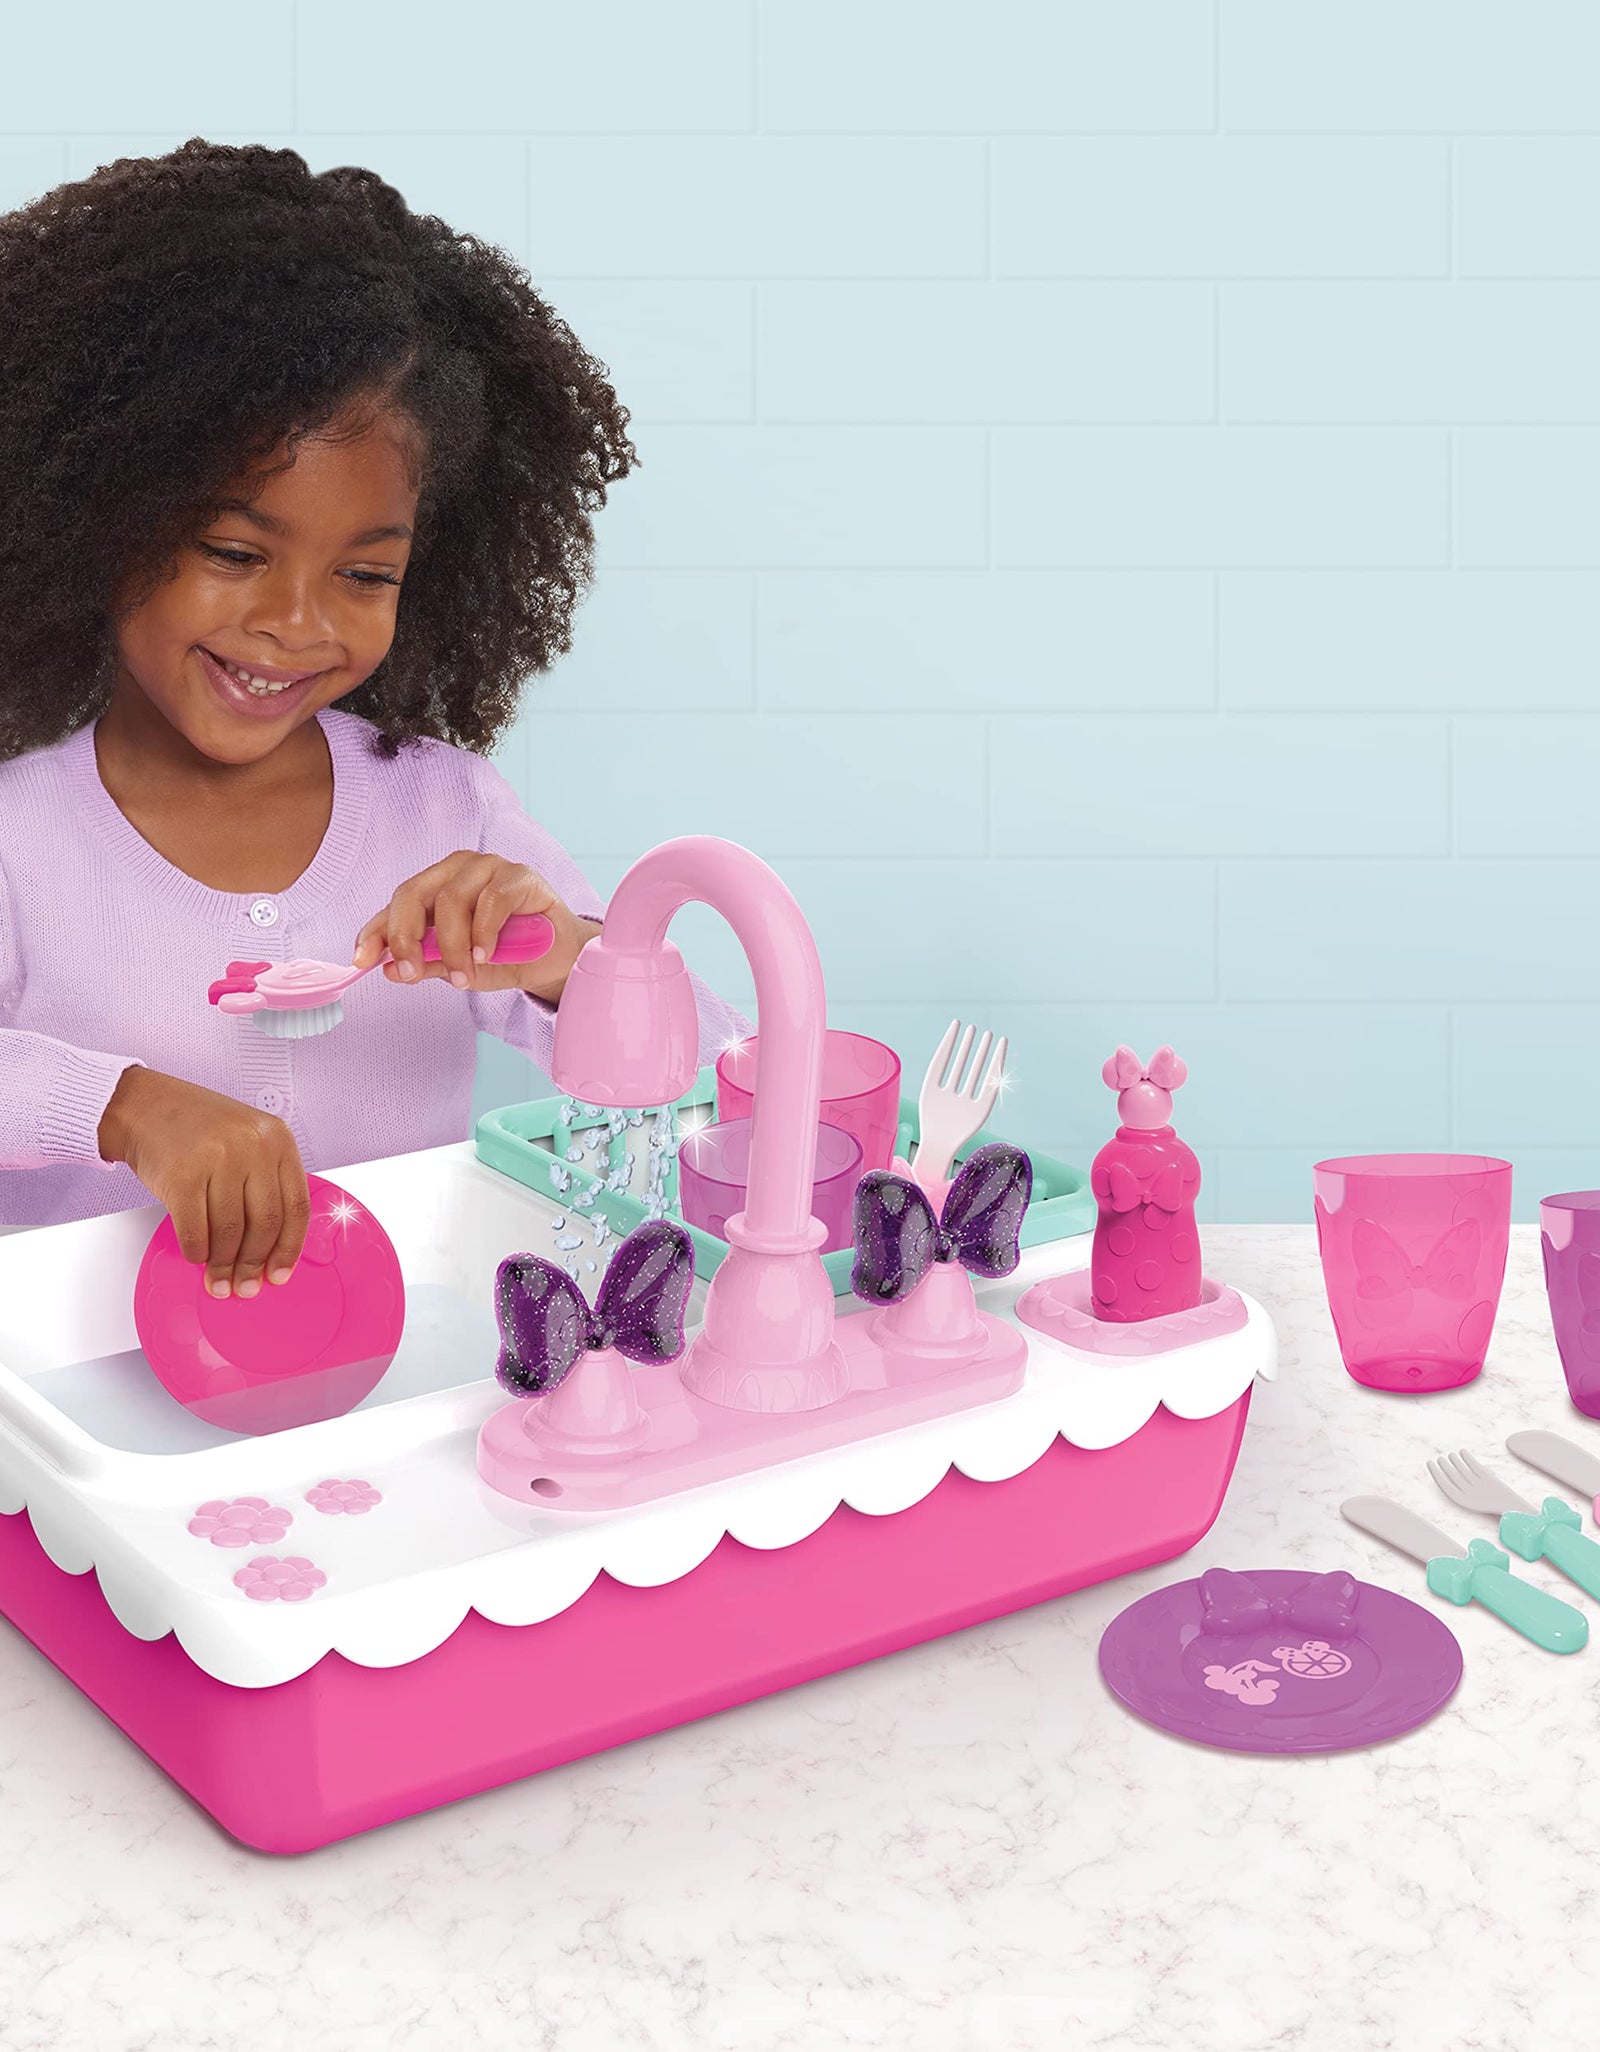 Minnie's Happy Helpers Magic Sink Set, Pretend Play Working Sink, Kids Kitchen Set Toys, by Just Play